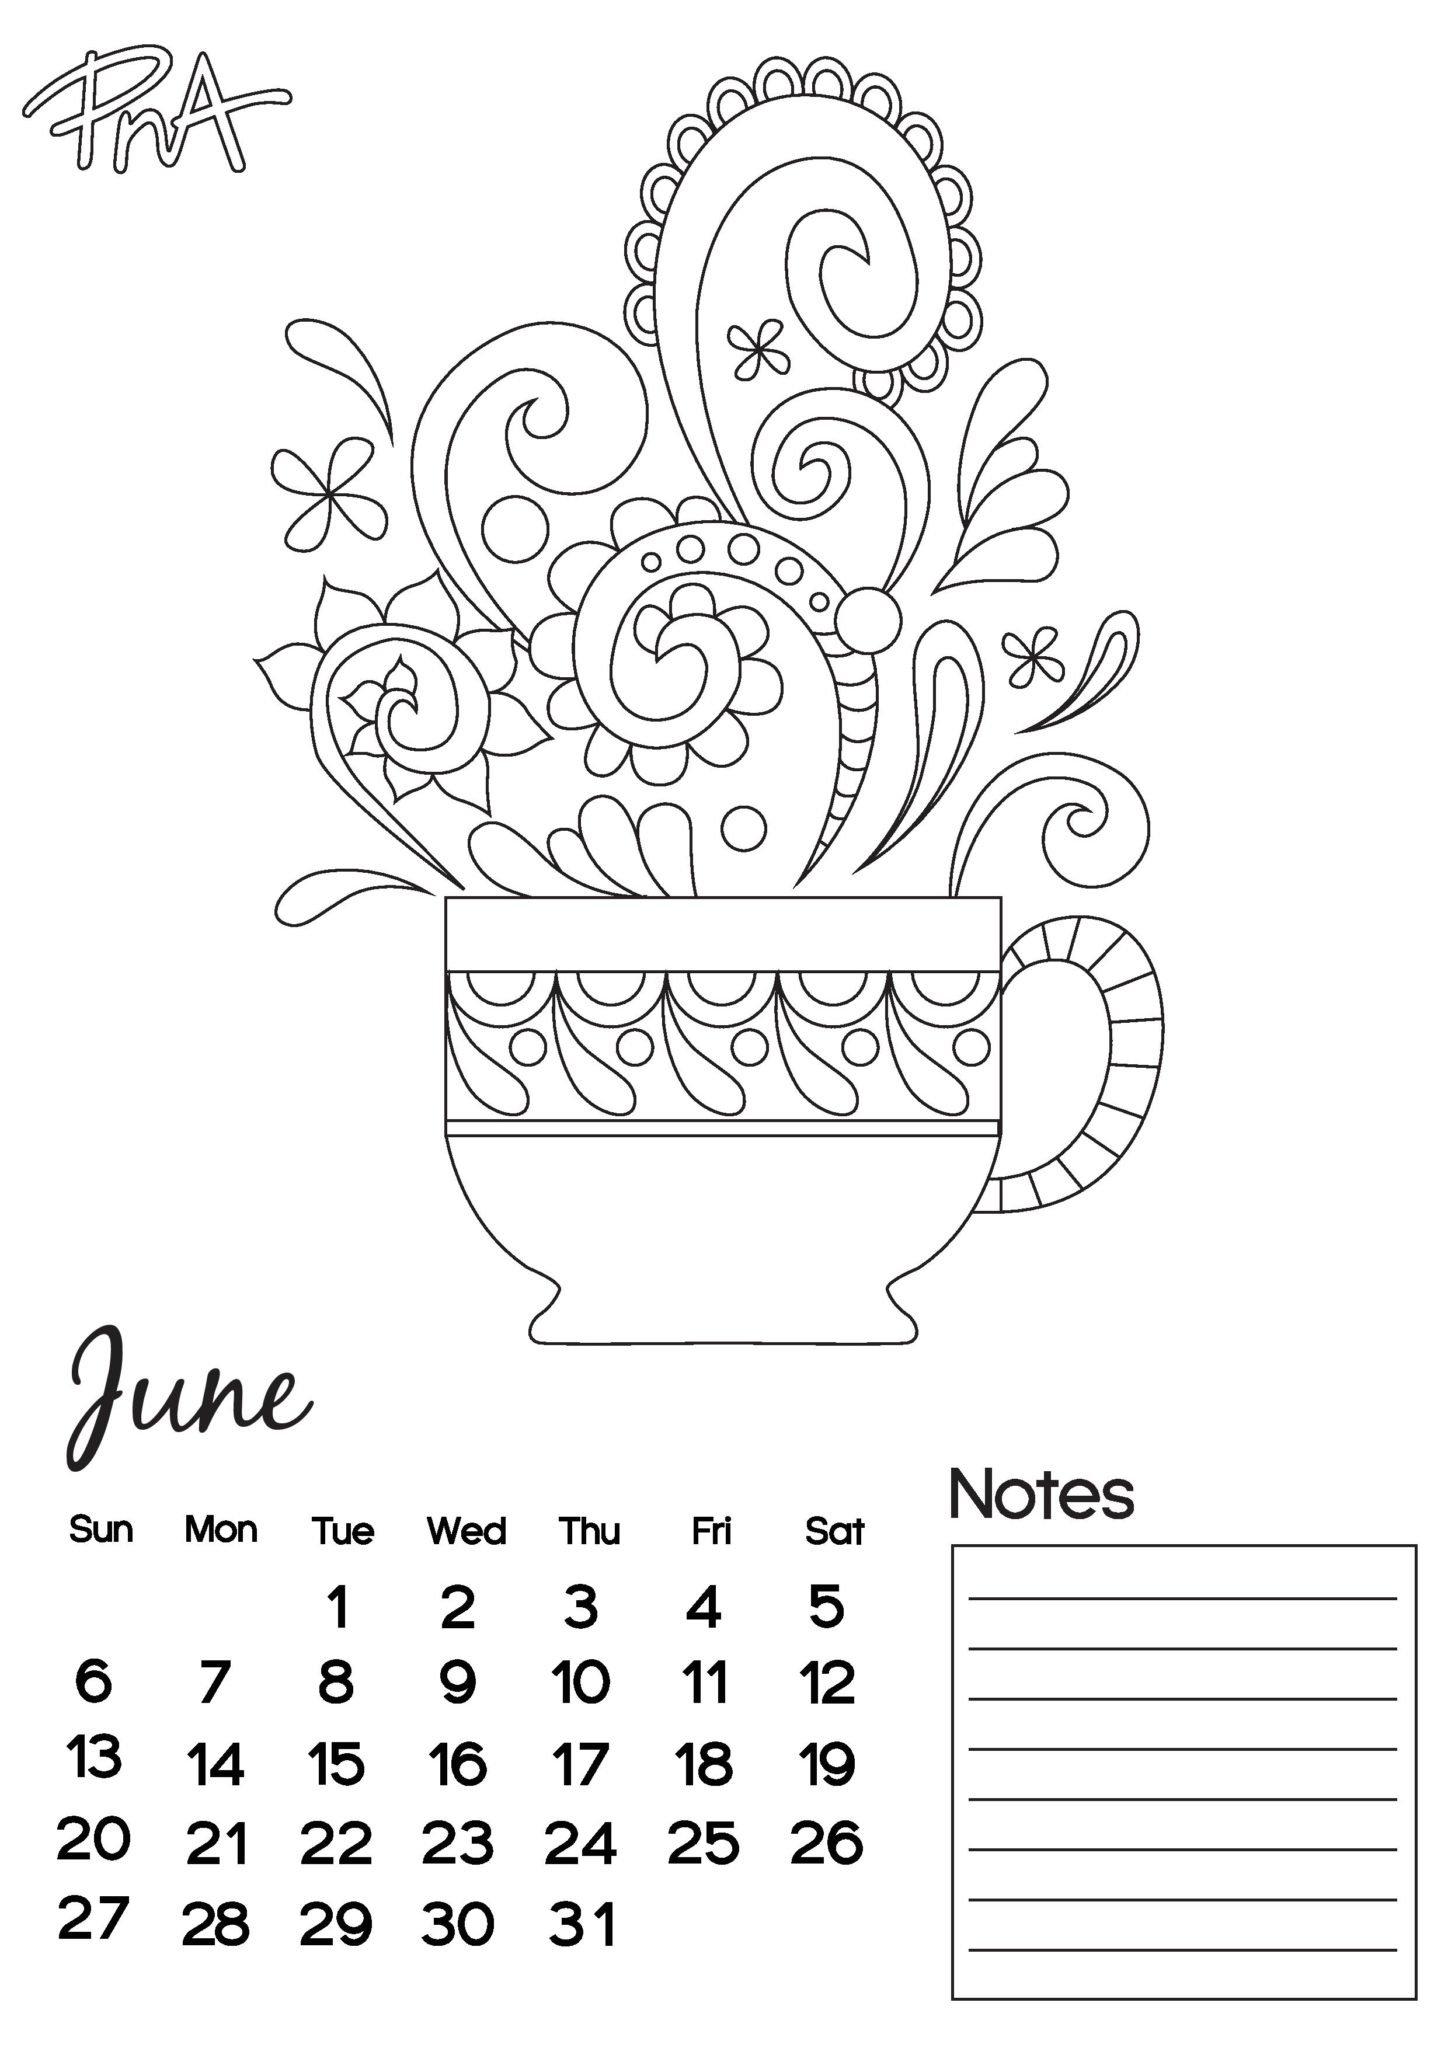 june-2017-montlhy-calendar-printable-blank-calendar